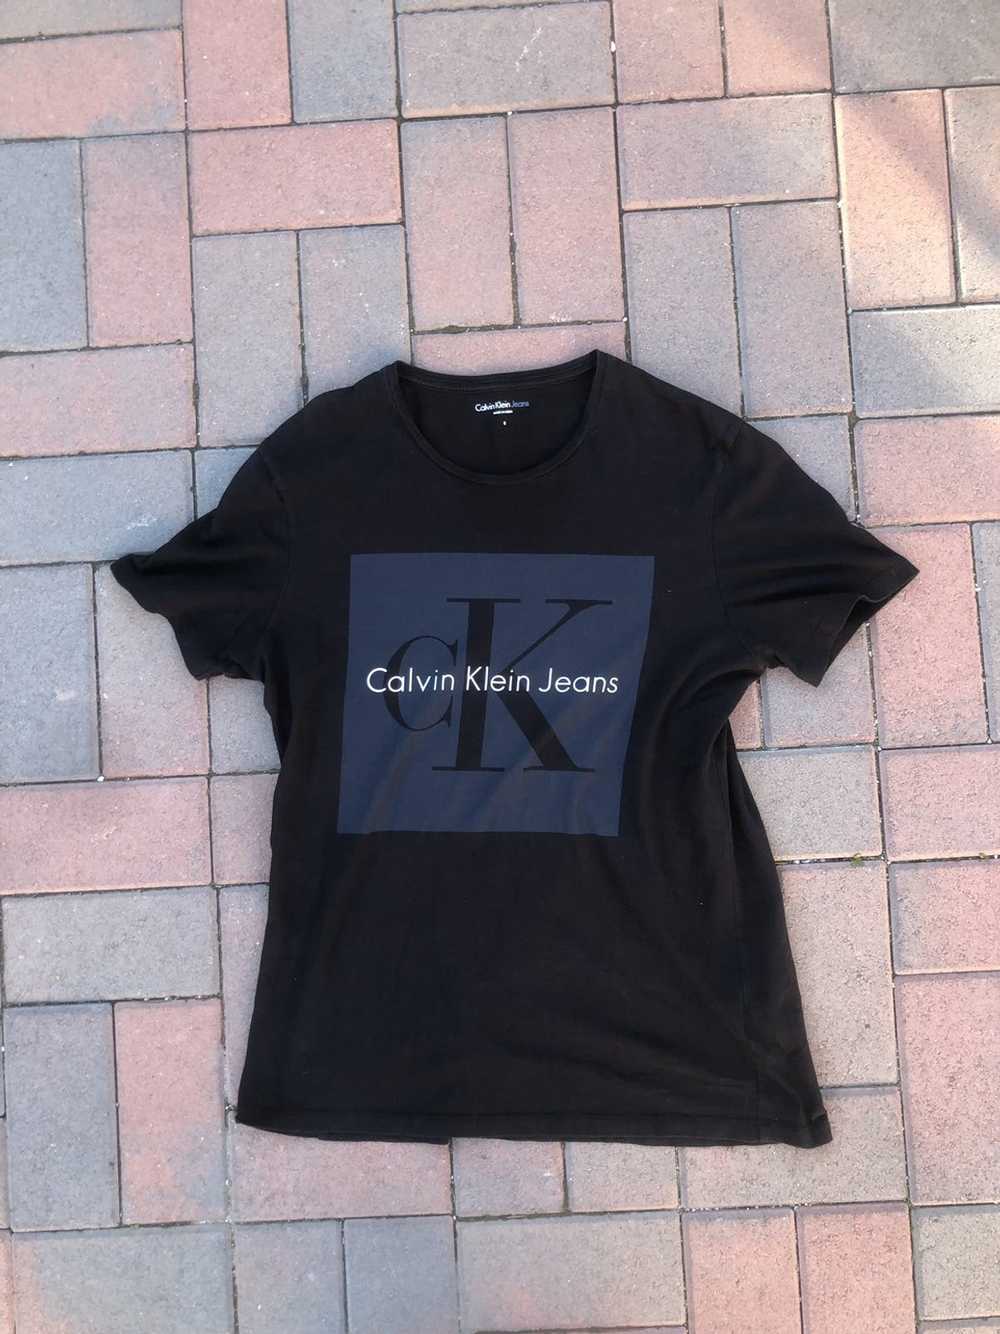 Calvin Klein Calvin Klein Jeans Black tee - image 5